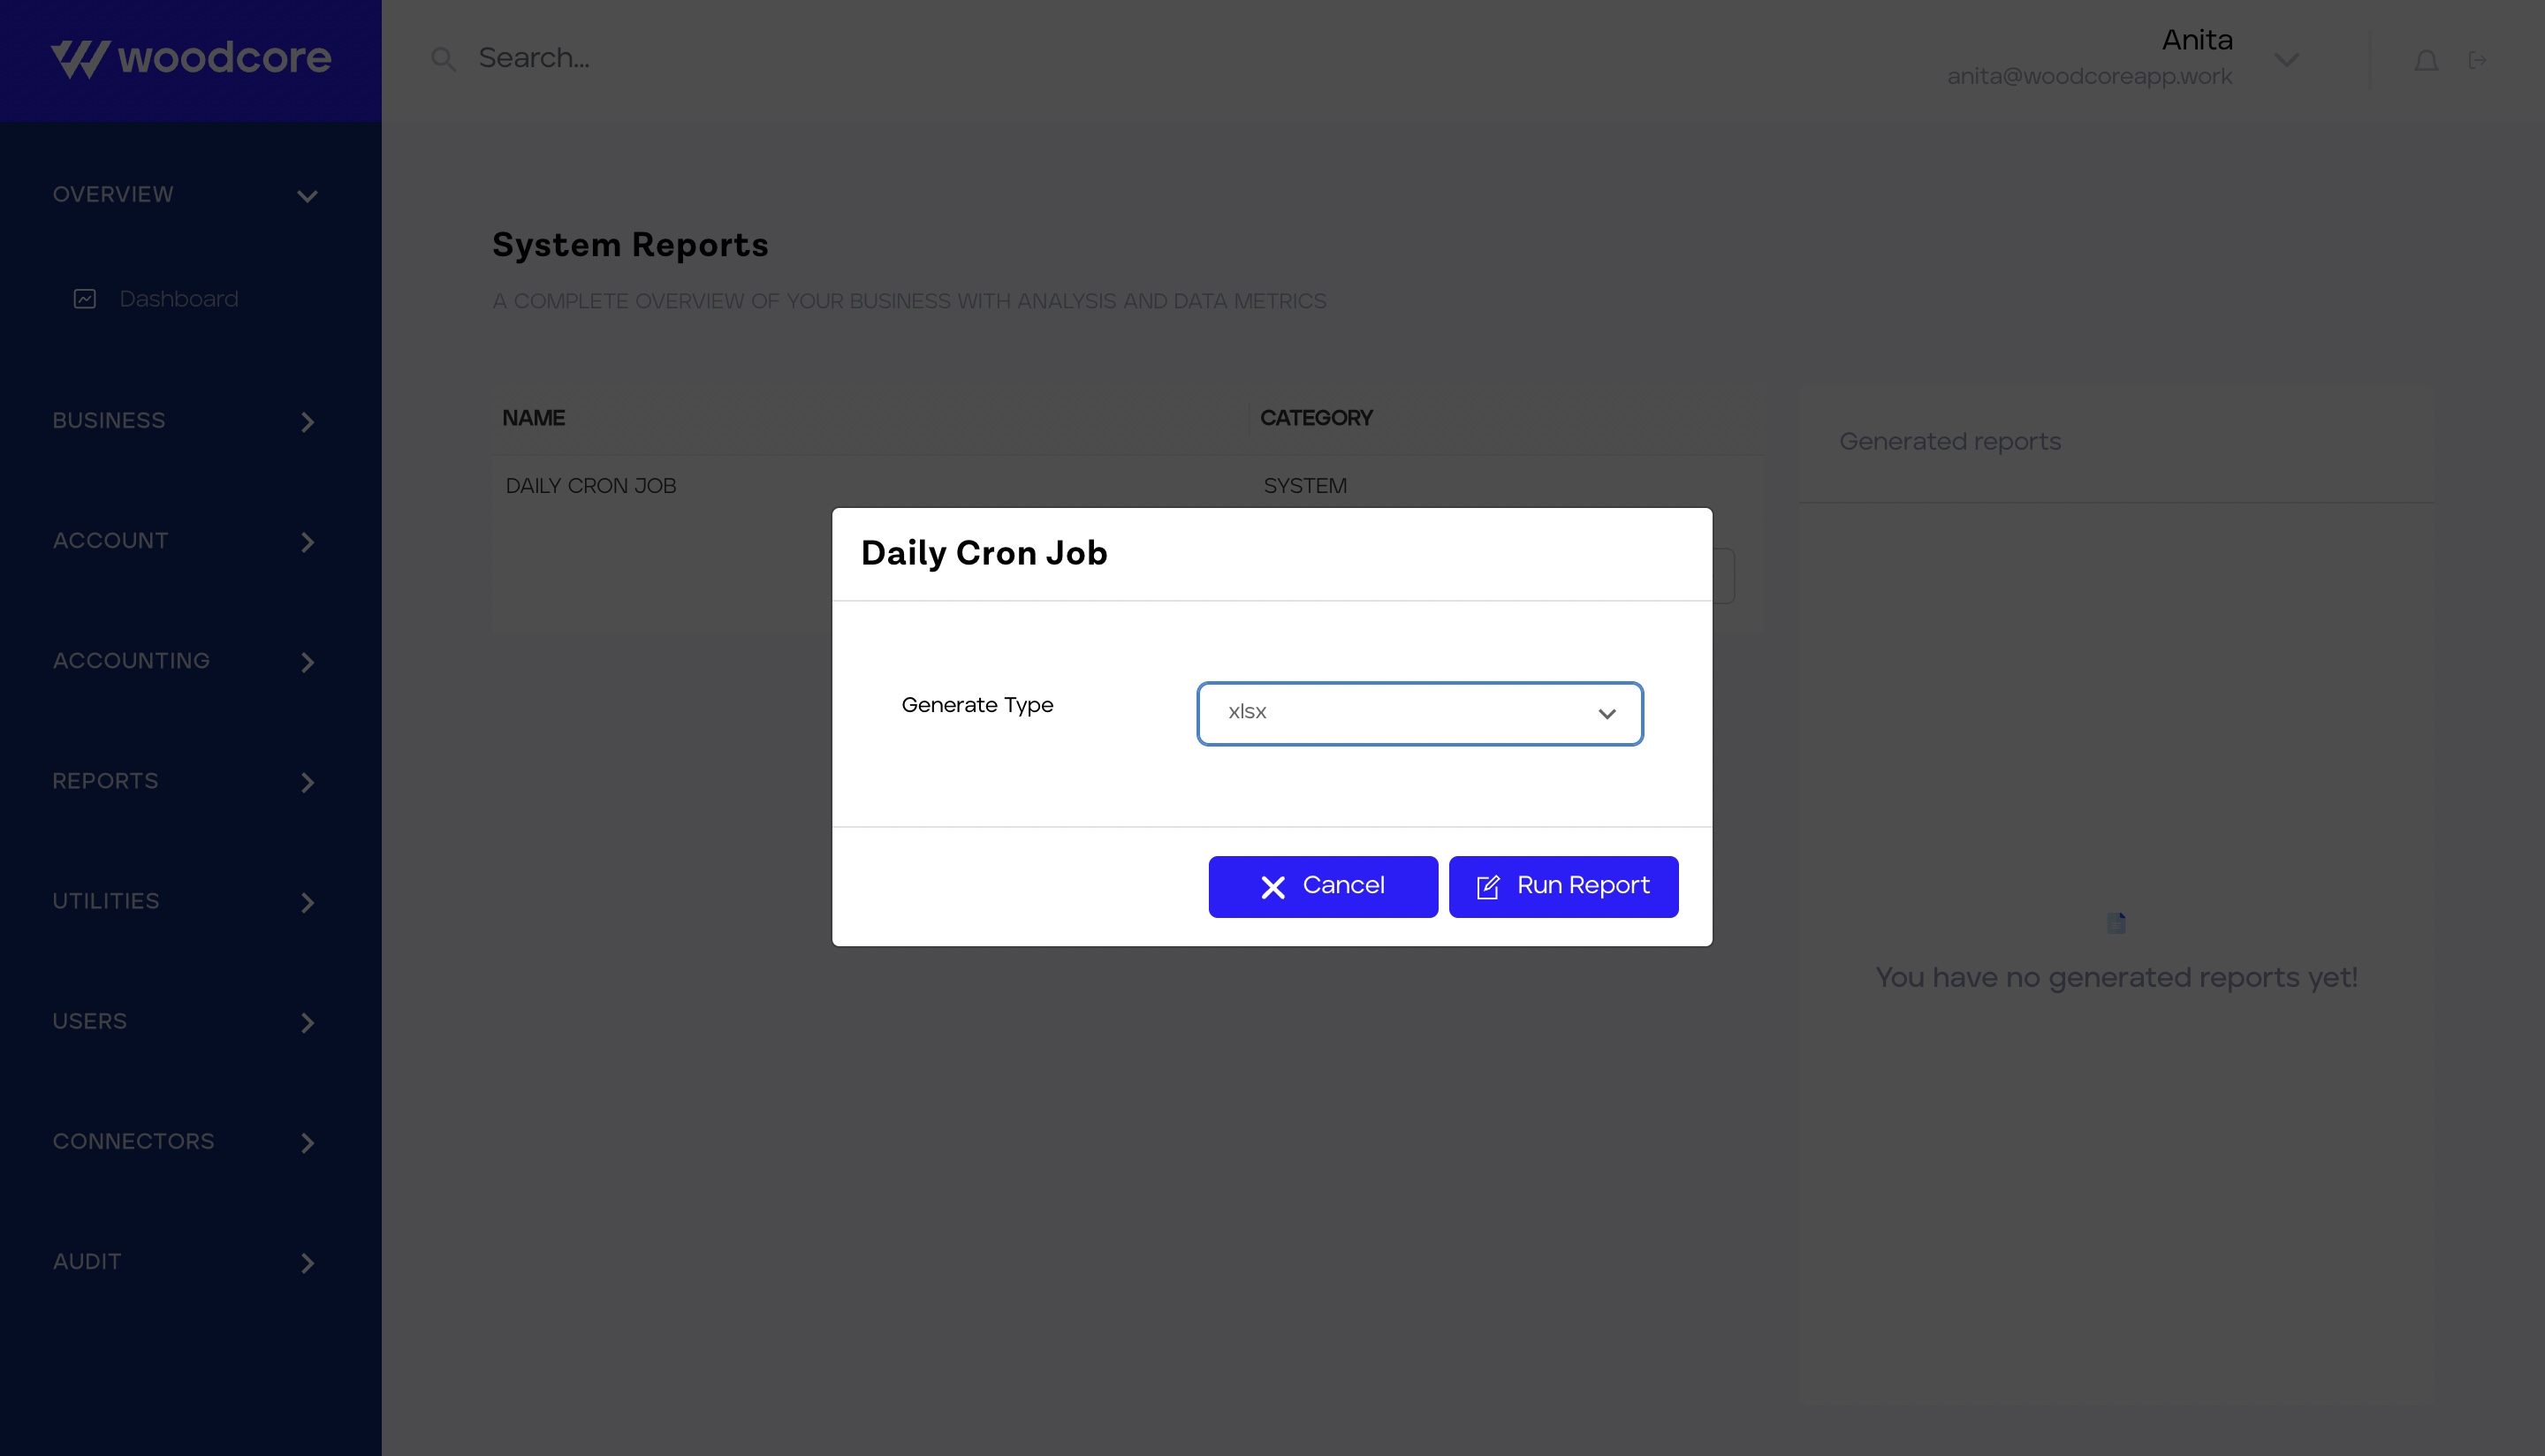 Generating a Daily Cron Job report